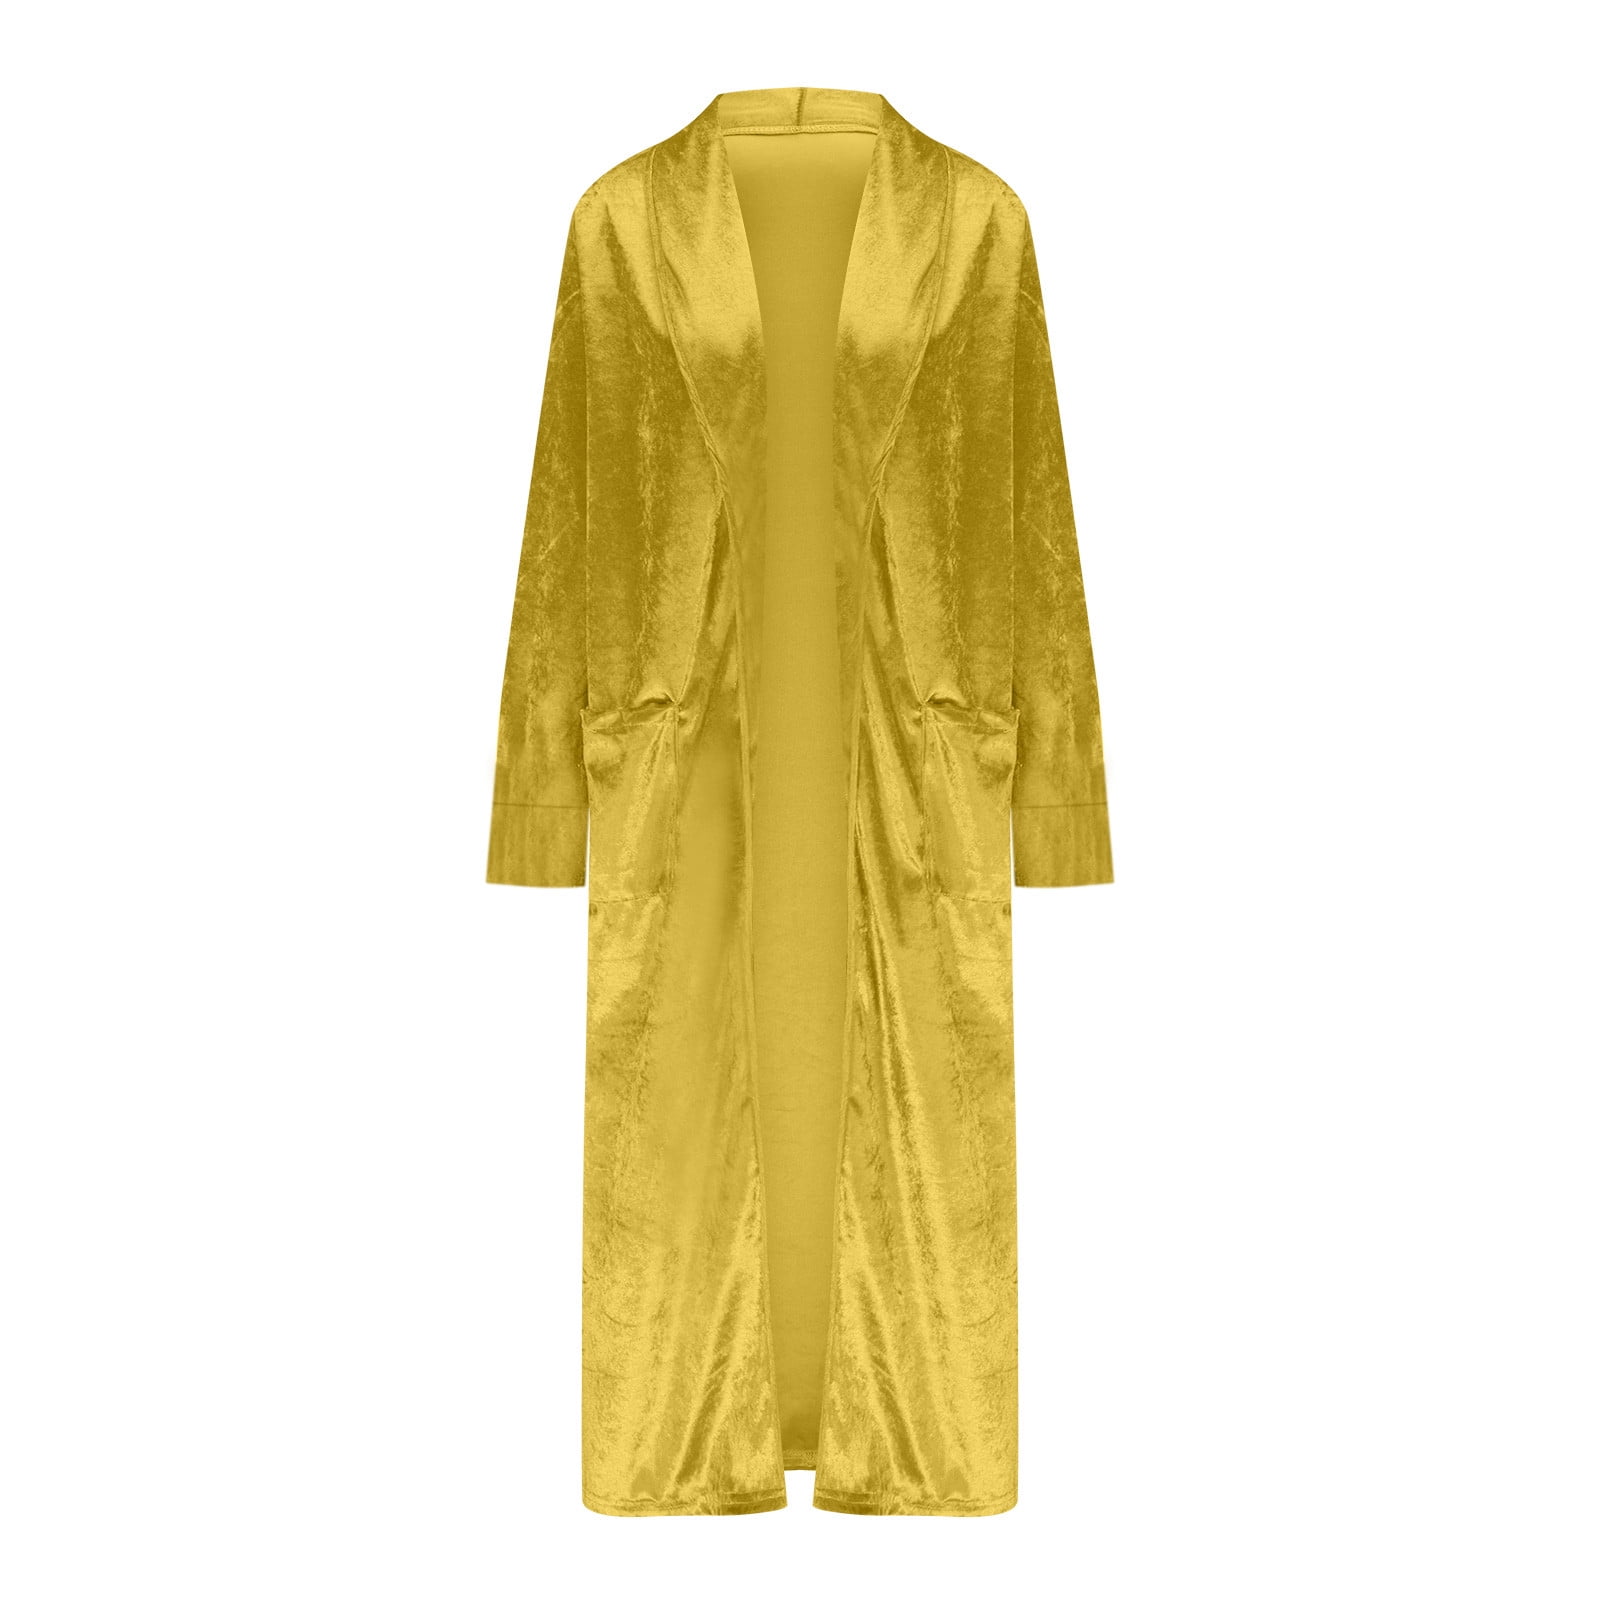 Arssm Women's Long Velvet Cardigan Jacket Lapel Collar Open Front Cardigan  Duster Coat with Pockets Outerwear (Yellow-M)